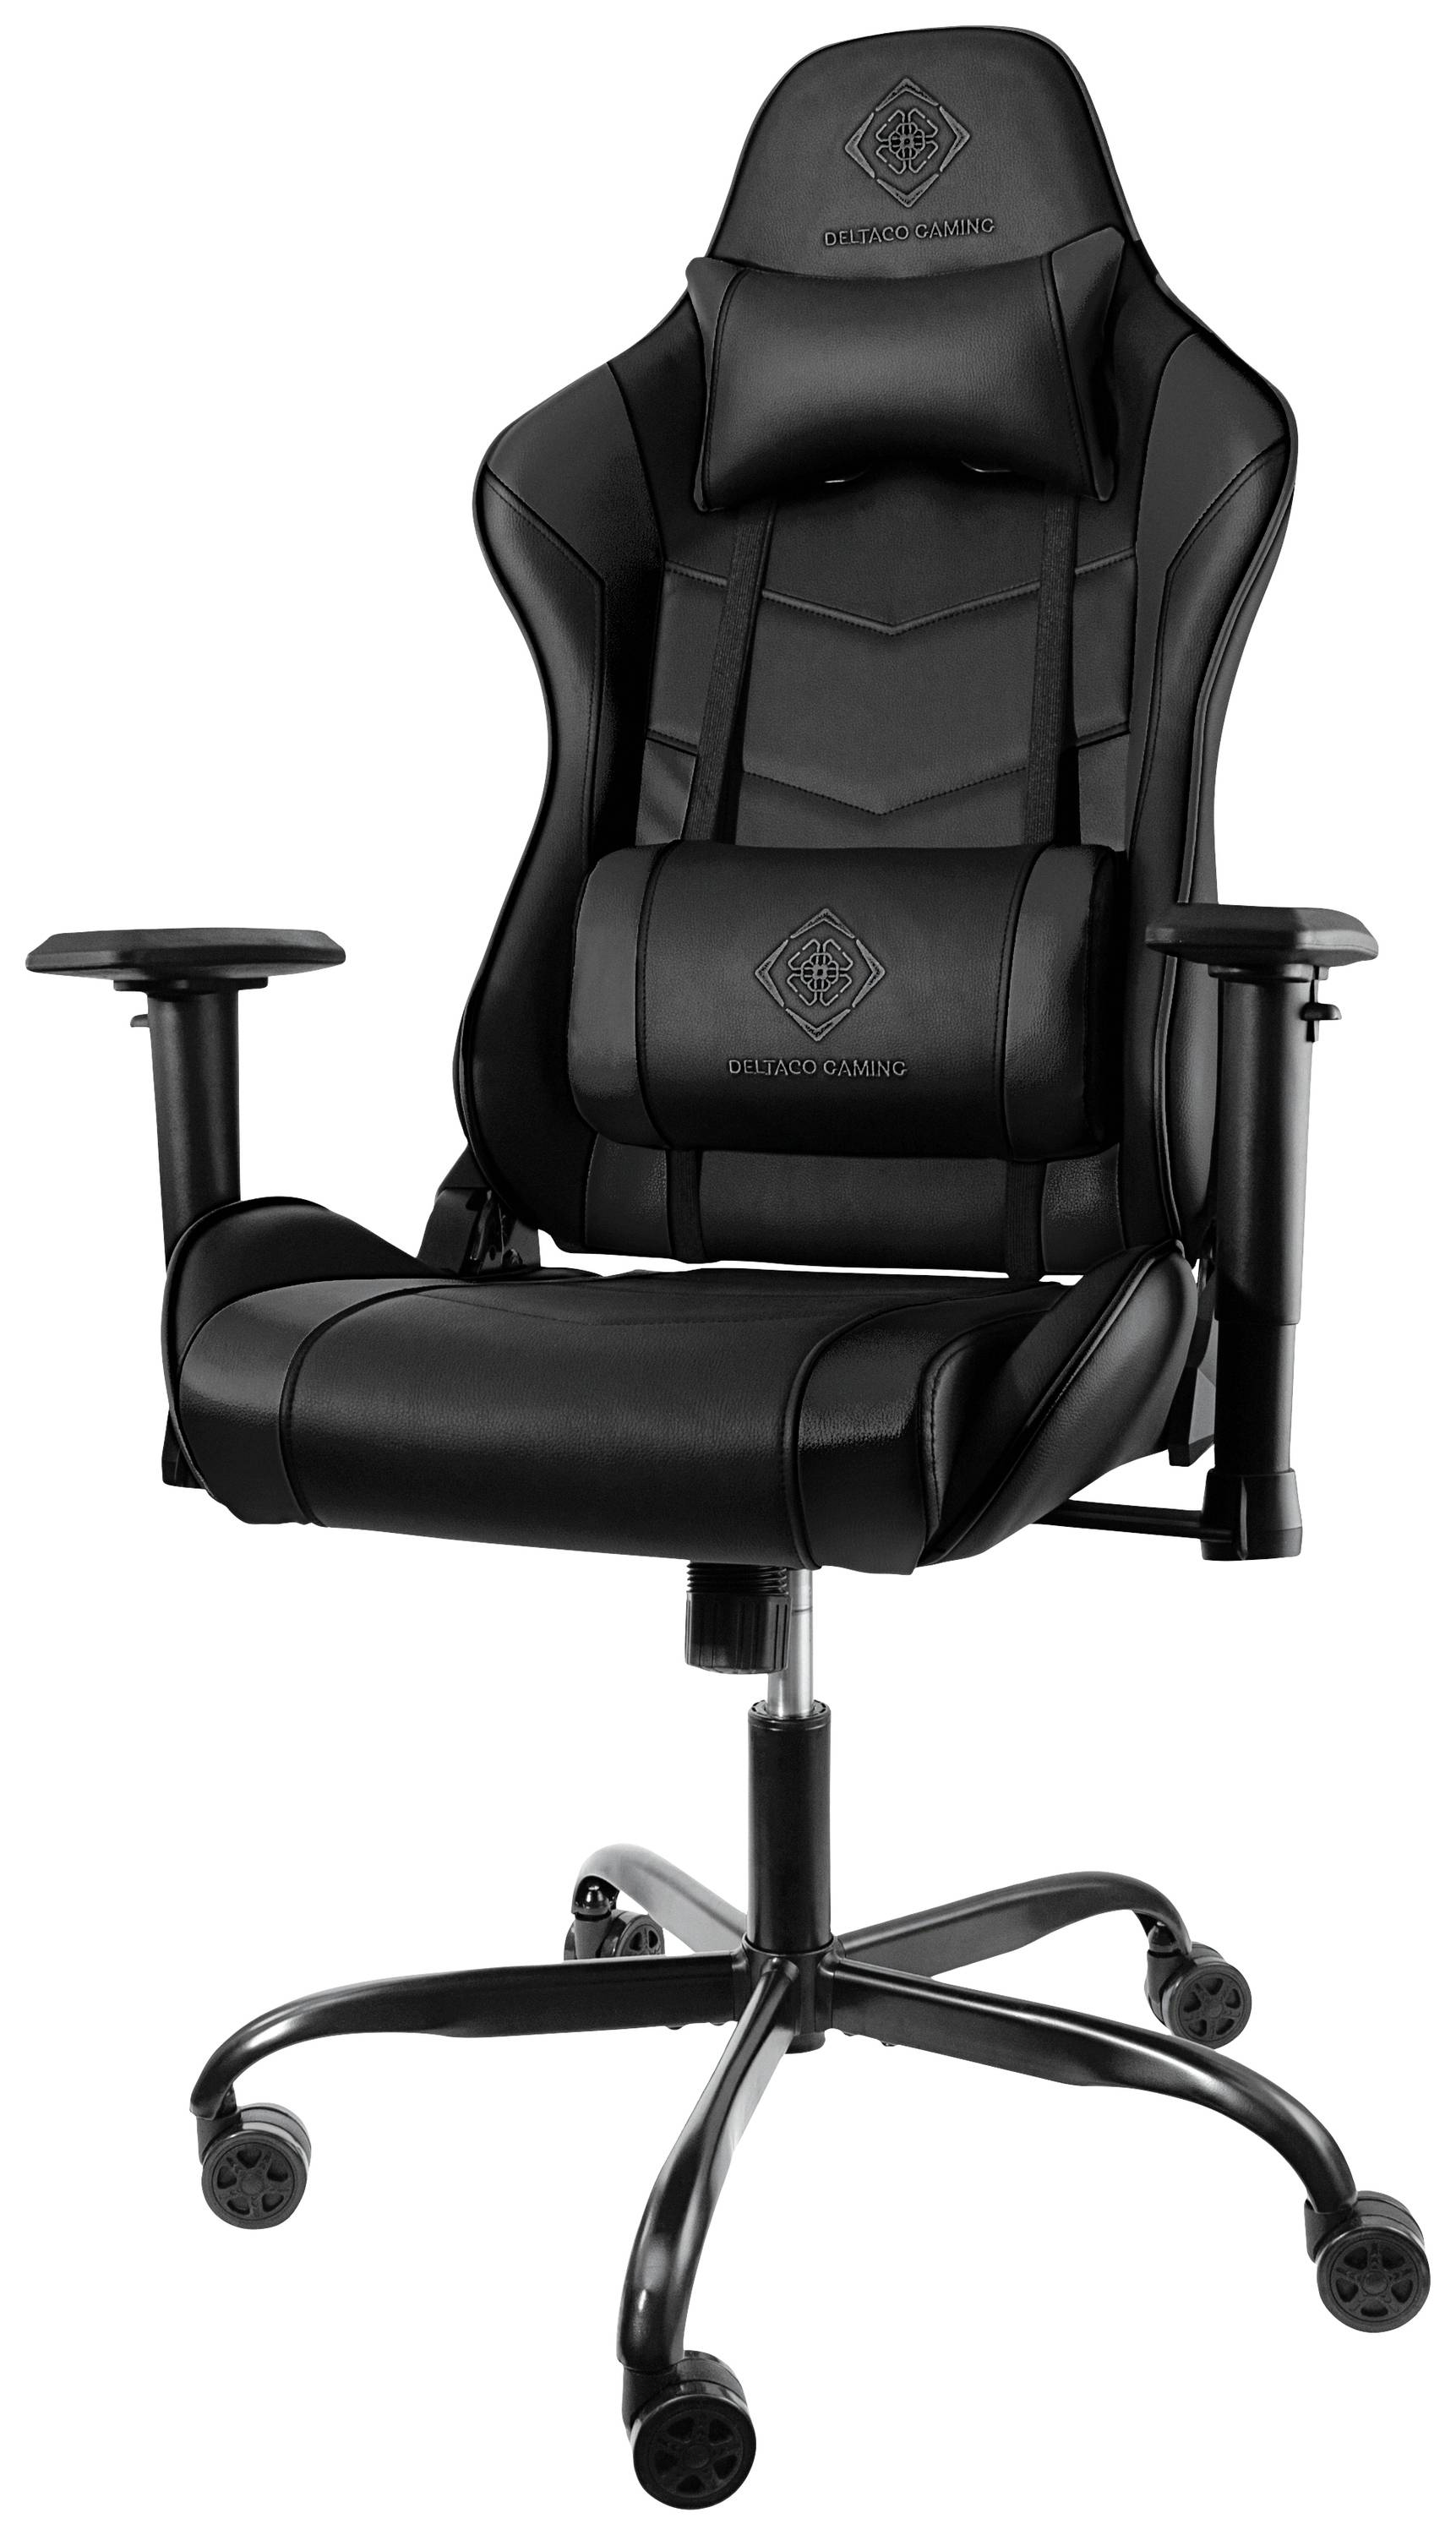 DELTACO GAMING Gaming chair Black | Conrad.com